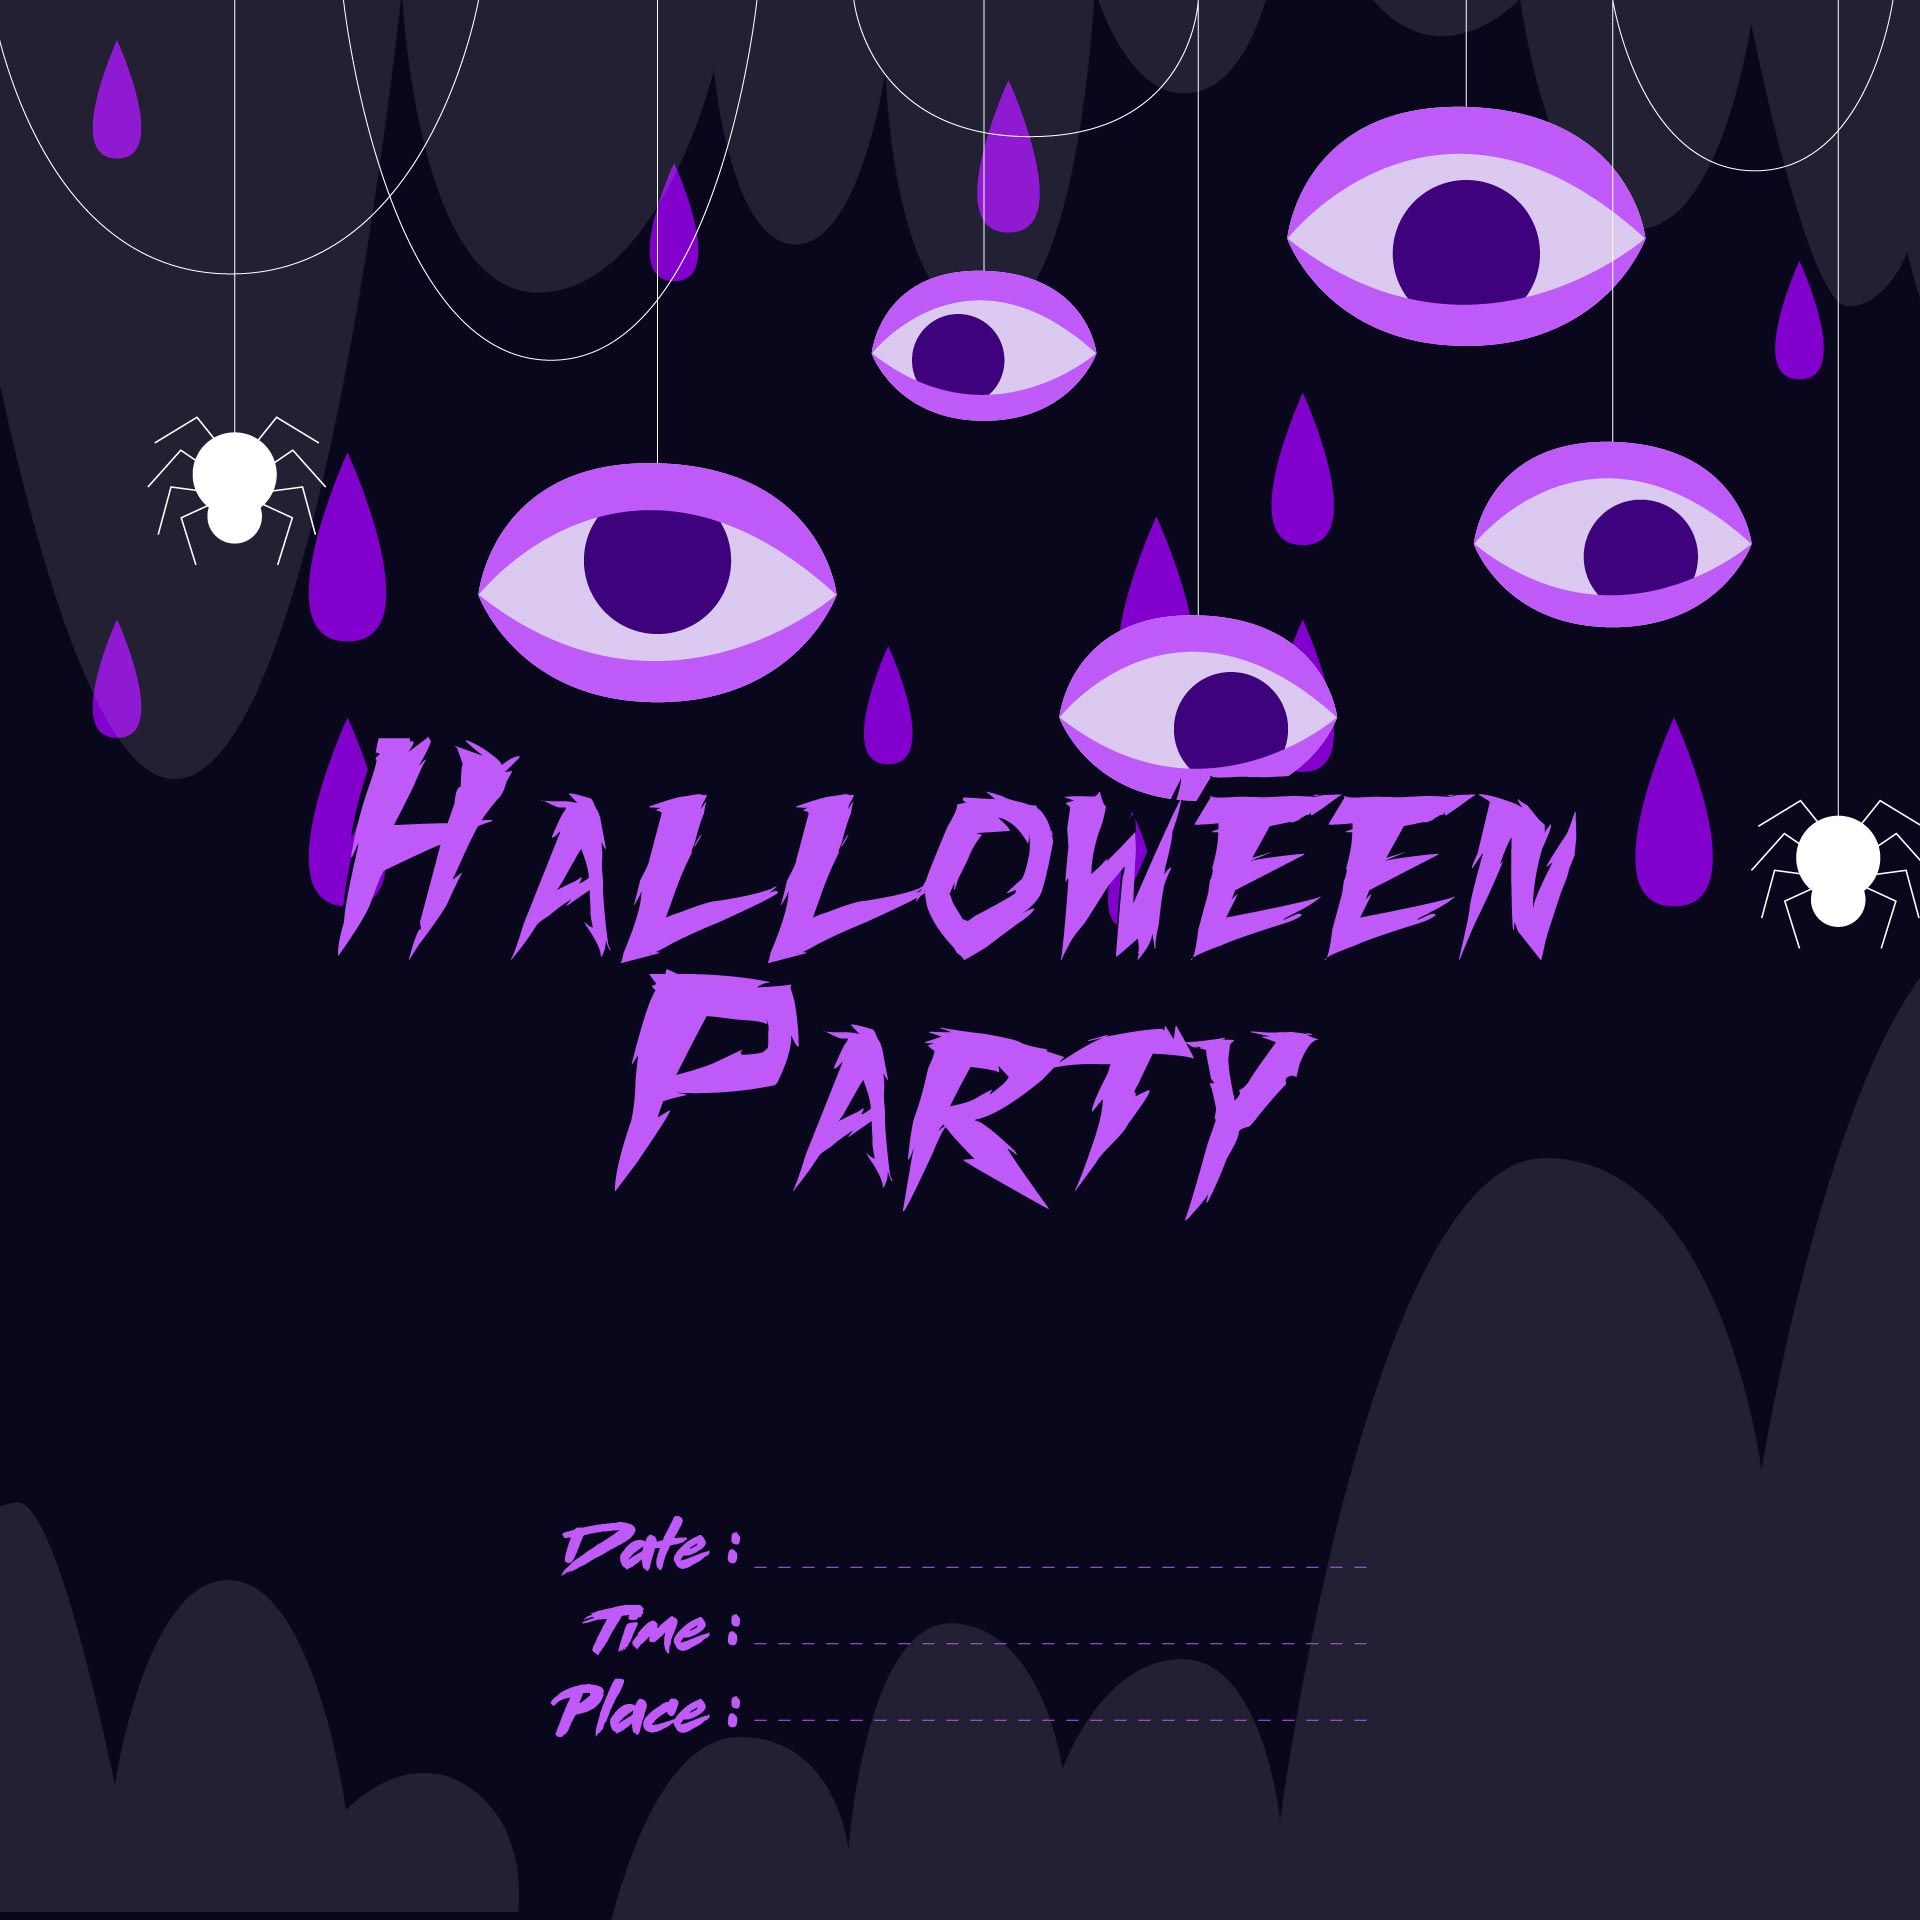 Dark Halloween Party Free Flyer Template